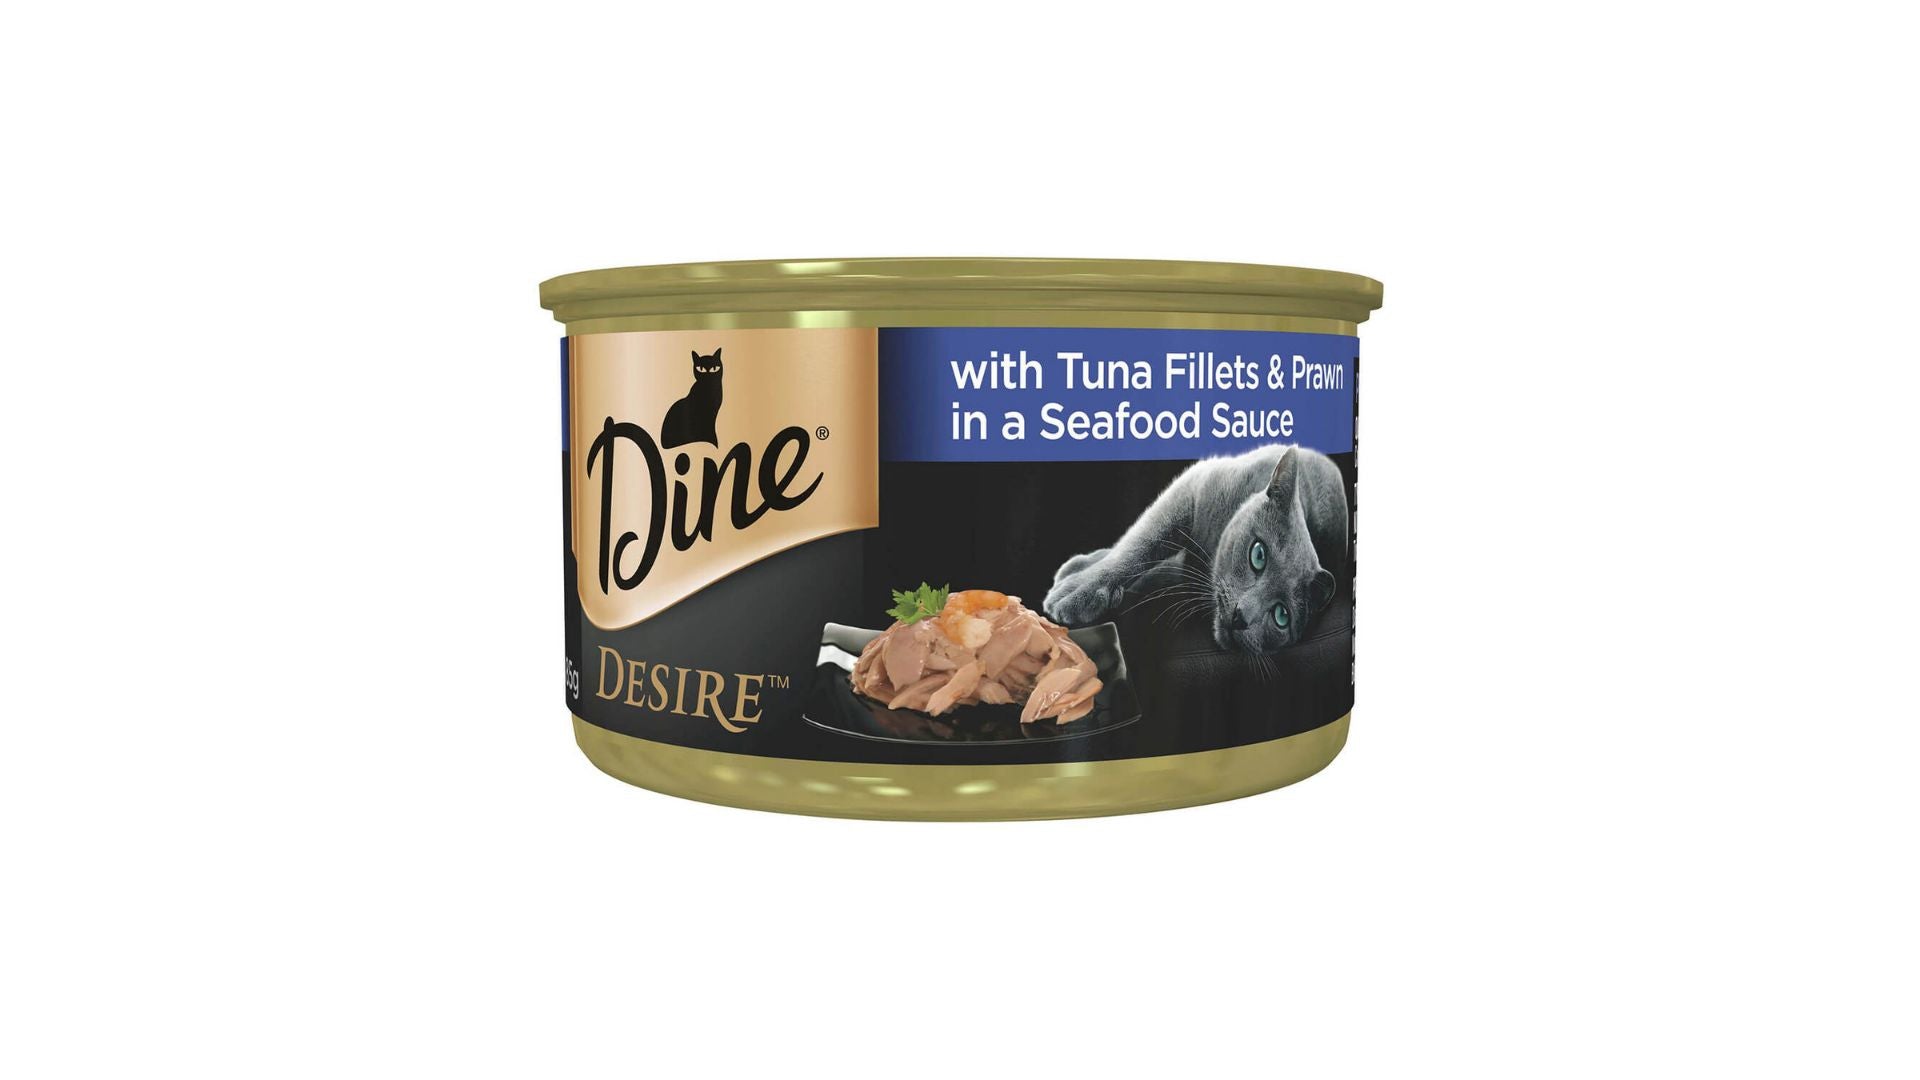 Dine Desire Tuna Fillets & Prawns In Seafood Sauce 85g